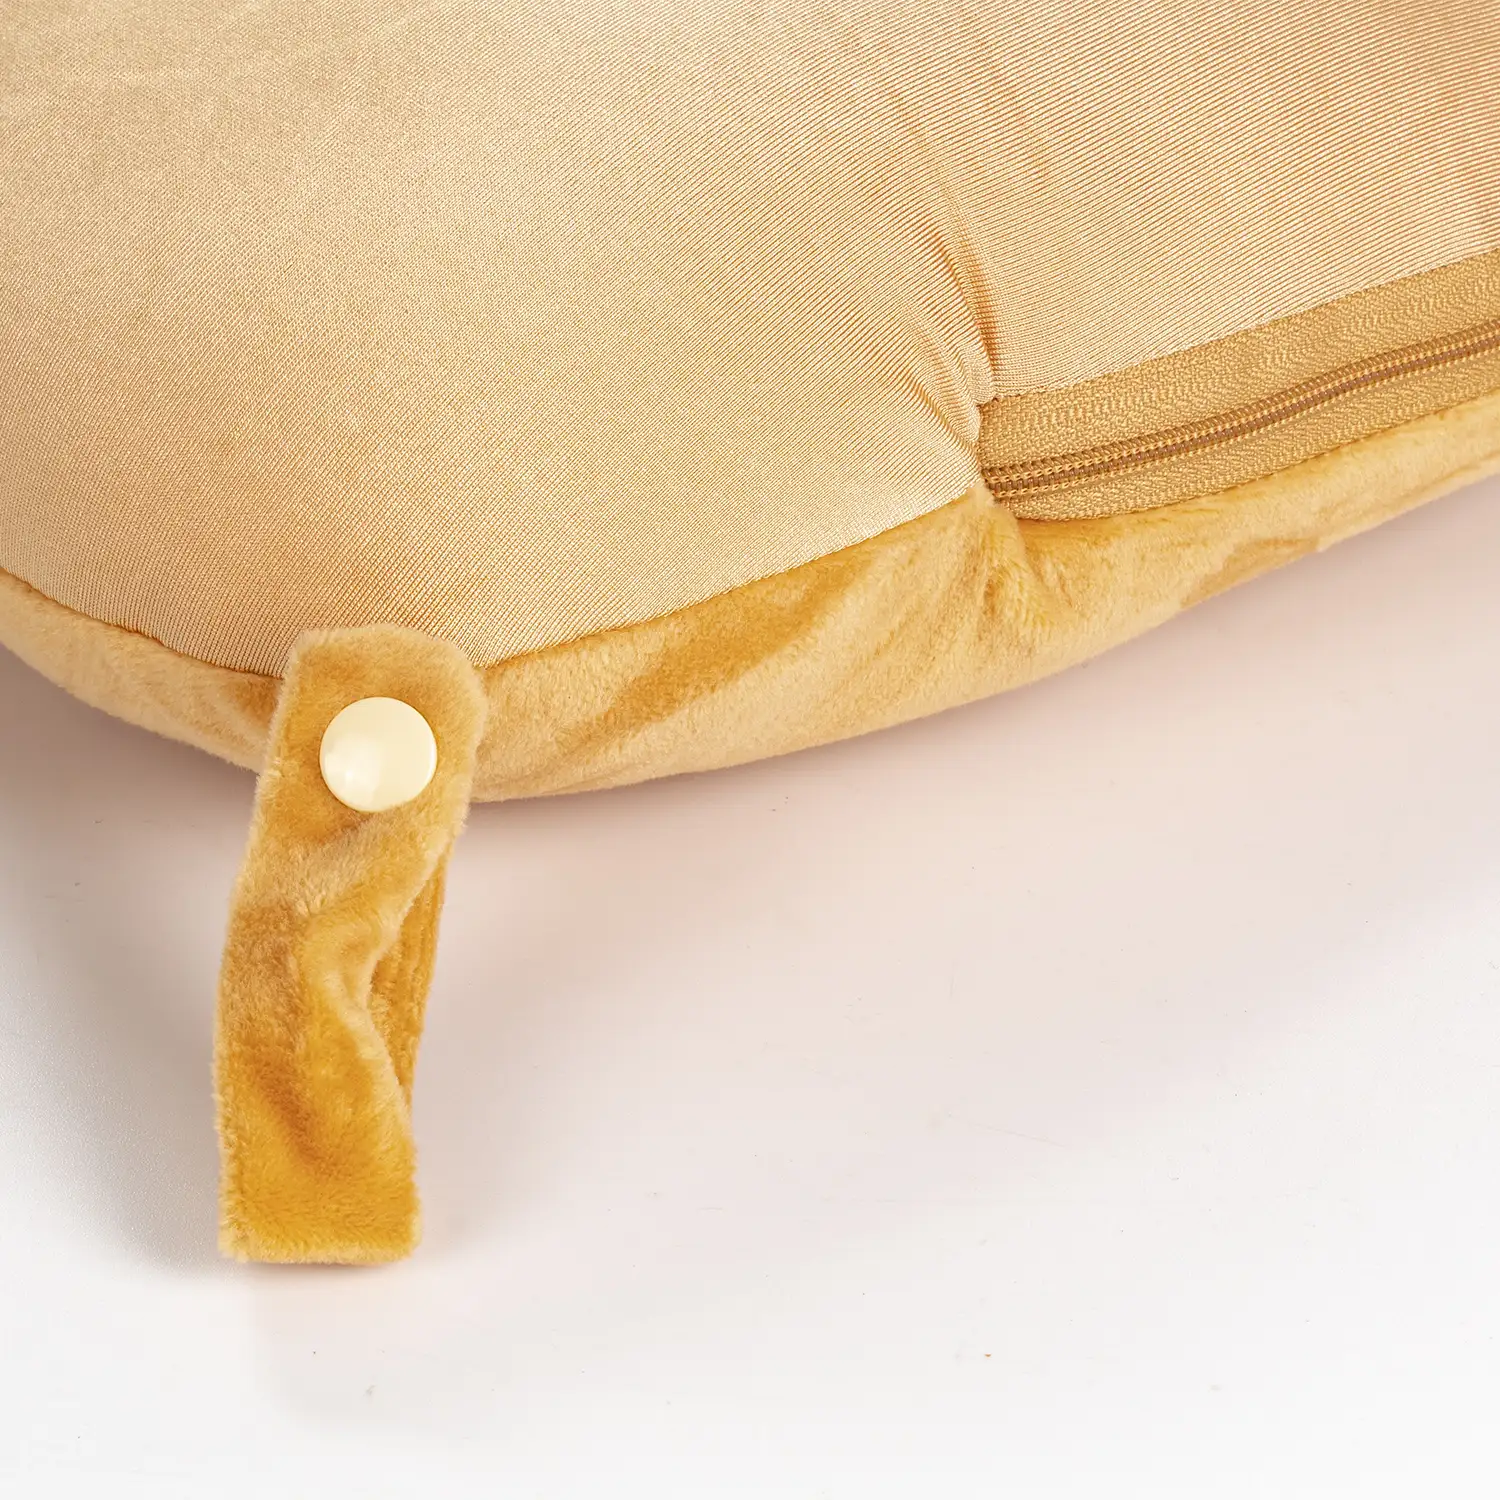 Perrito de peluche convertible en almohada de viaje cojín cervical, 2 en 1.